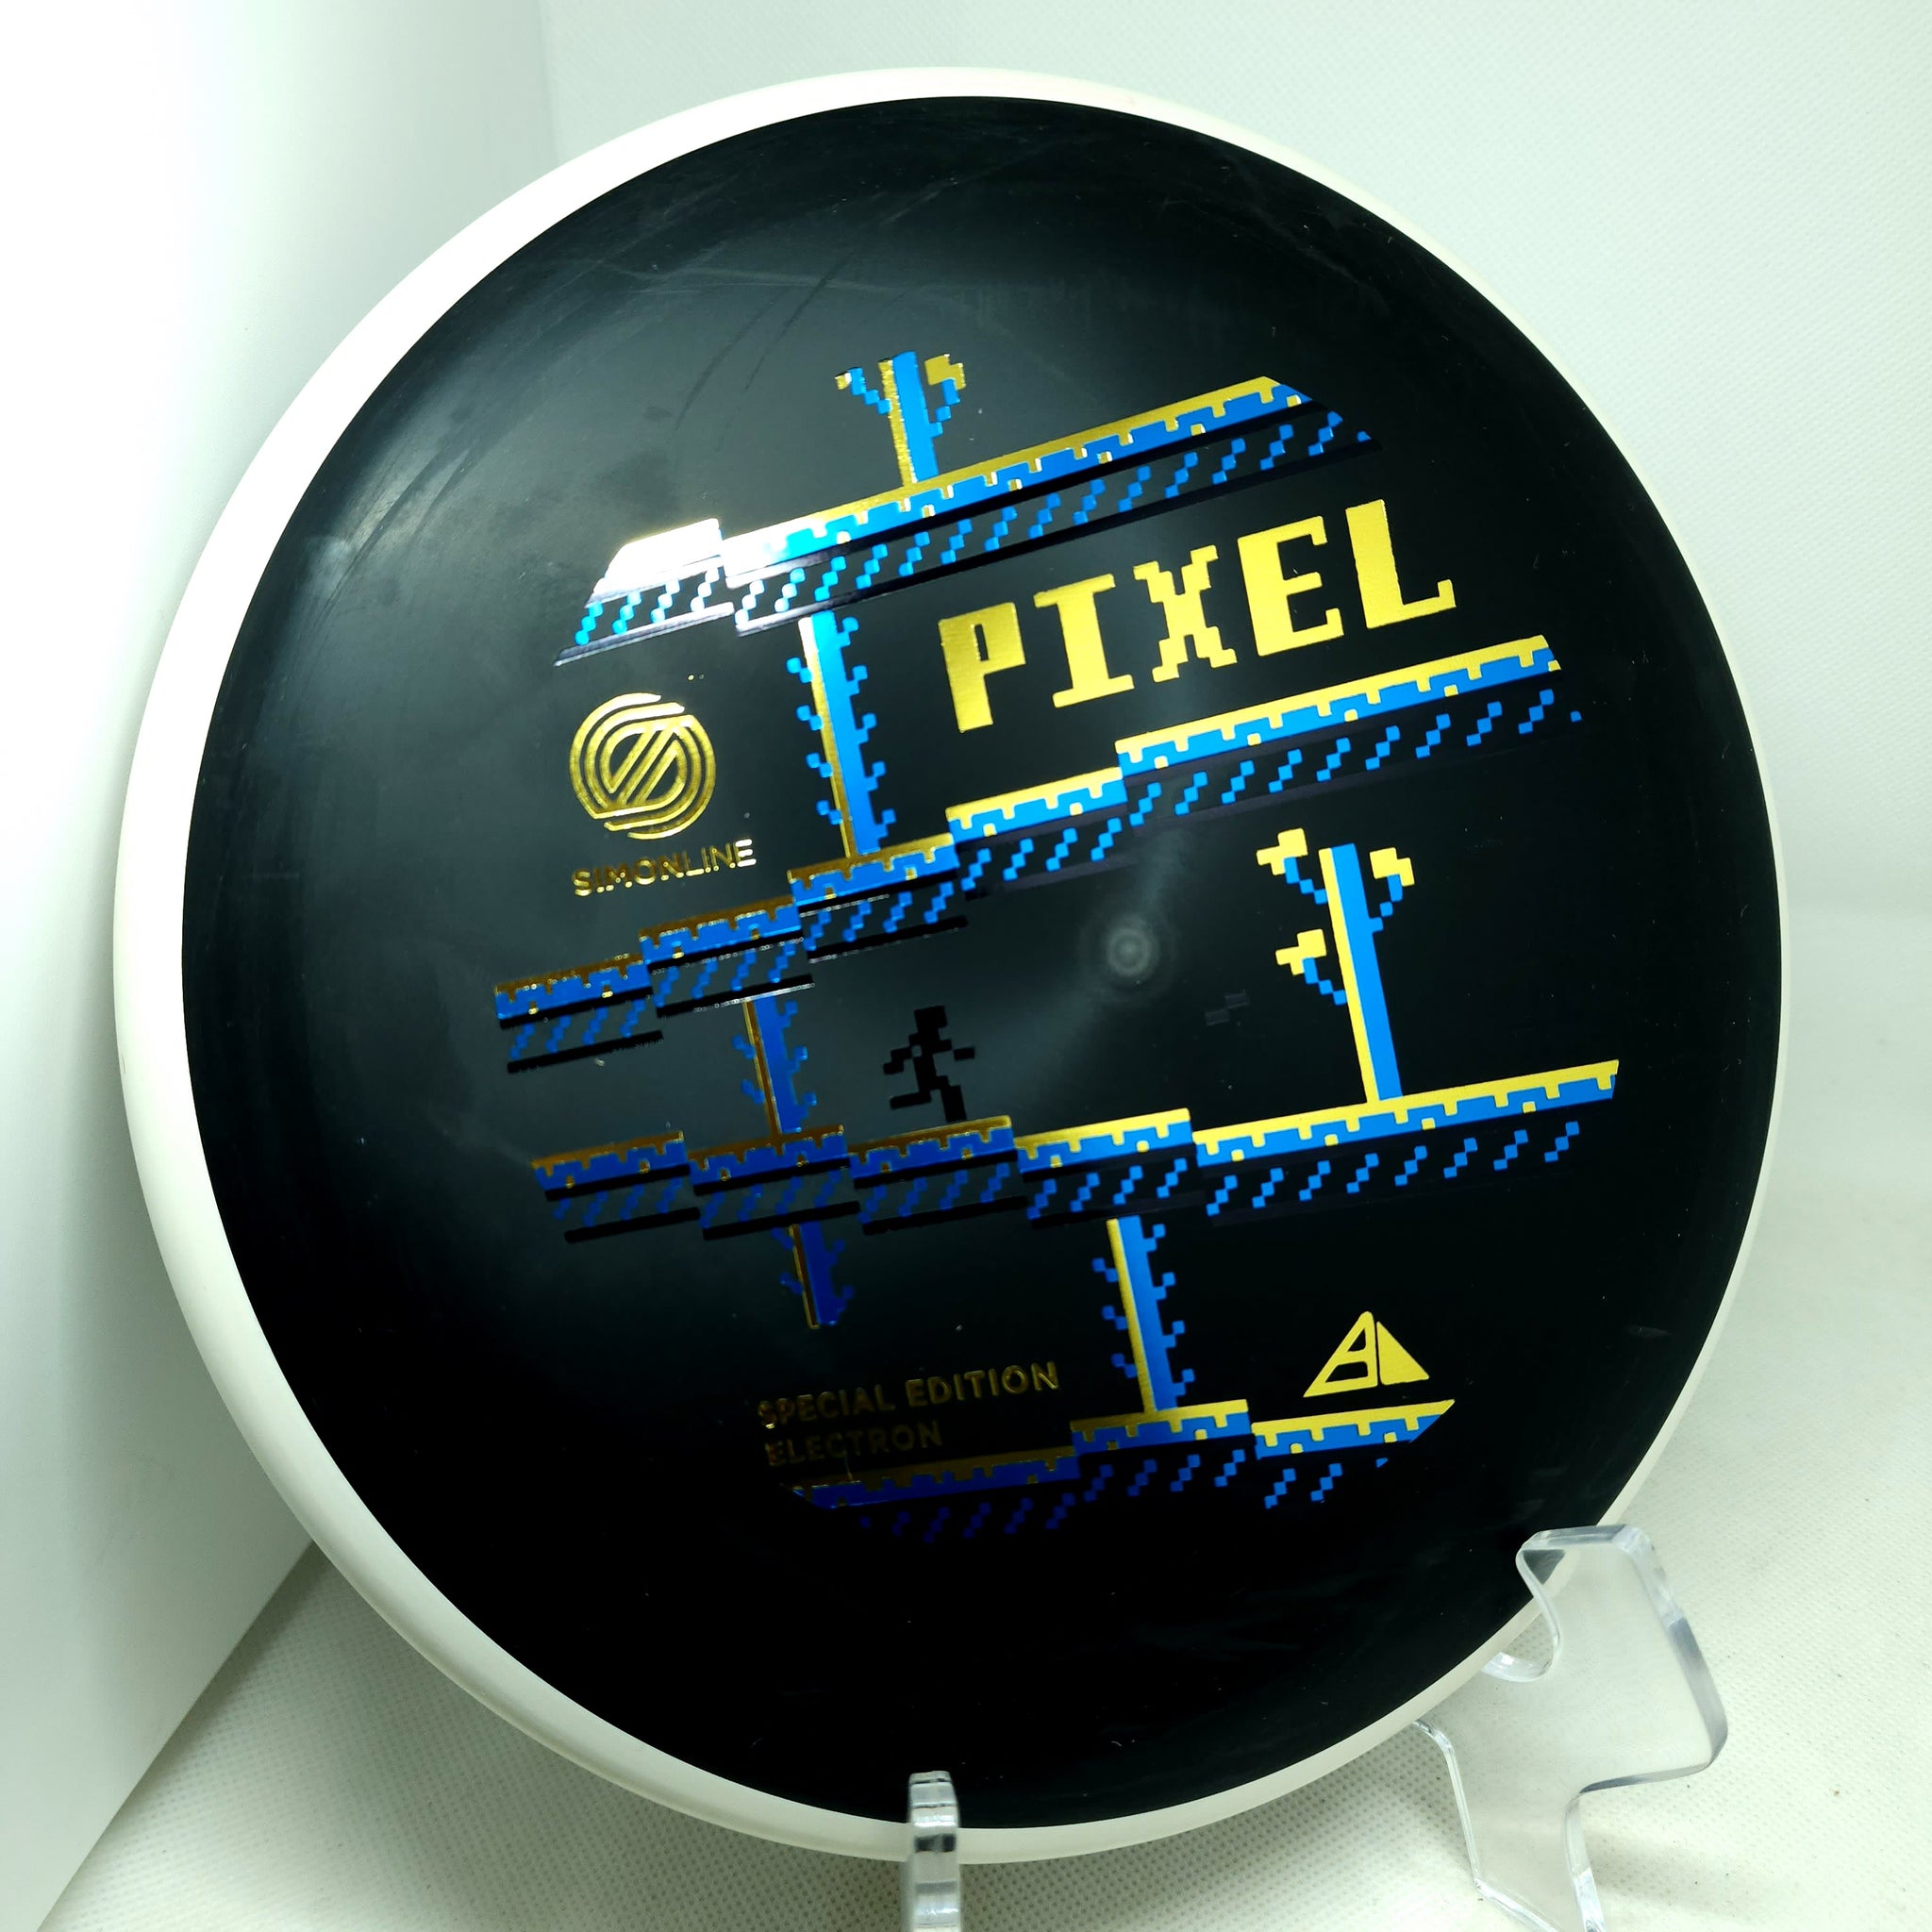 Pixel (Electron) Special Edition Simon Line